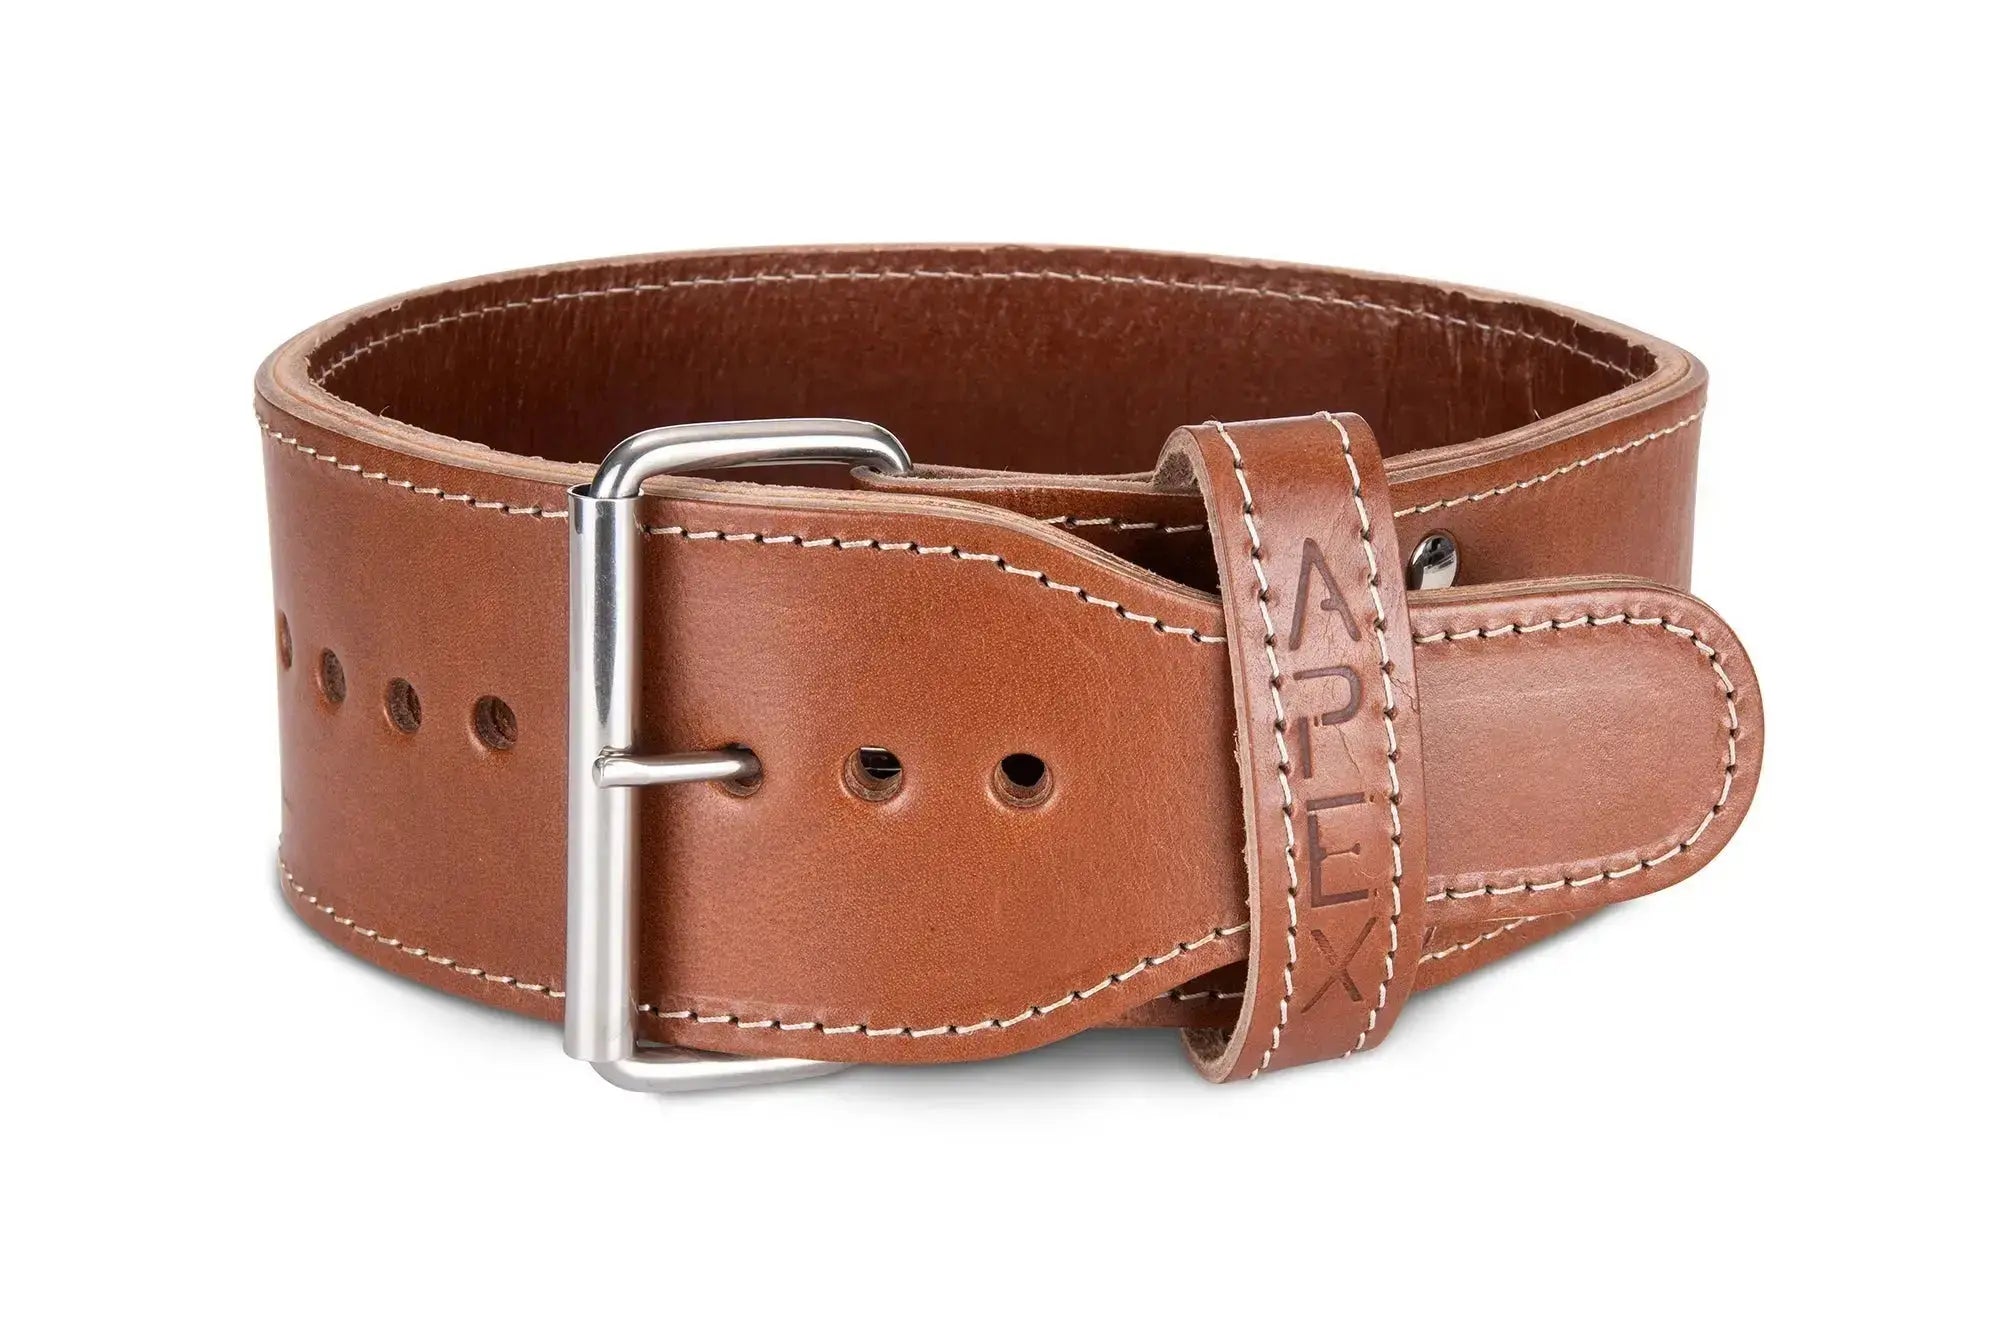 4 Inch Shibusa Premium Leather Lifting Belt